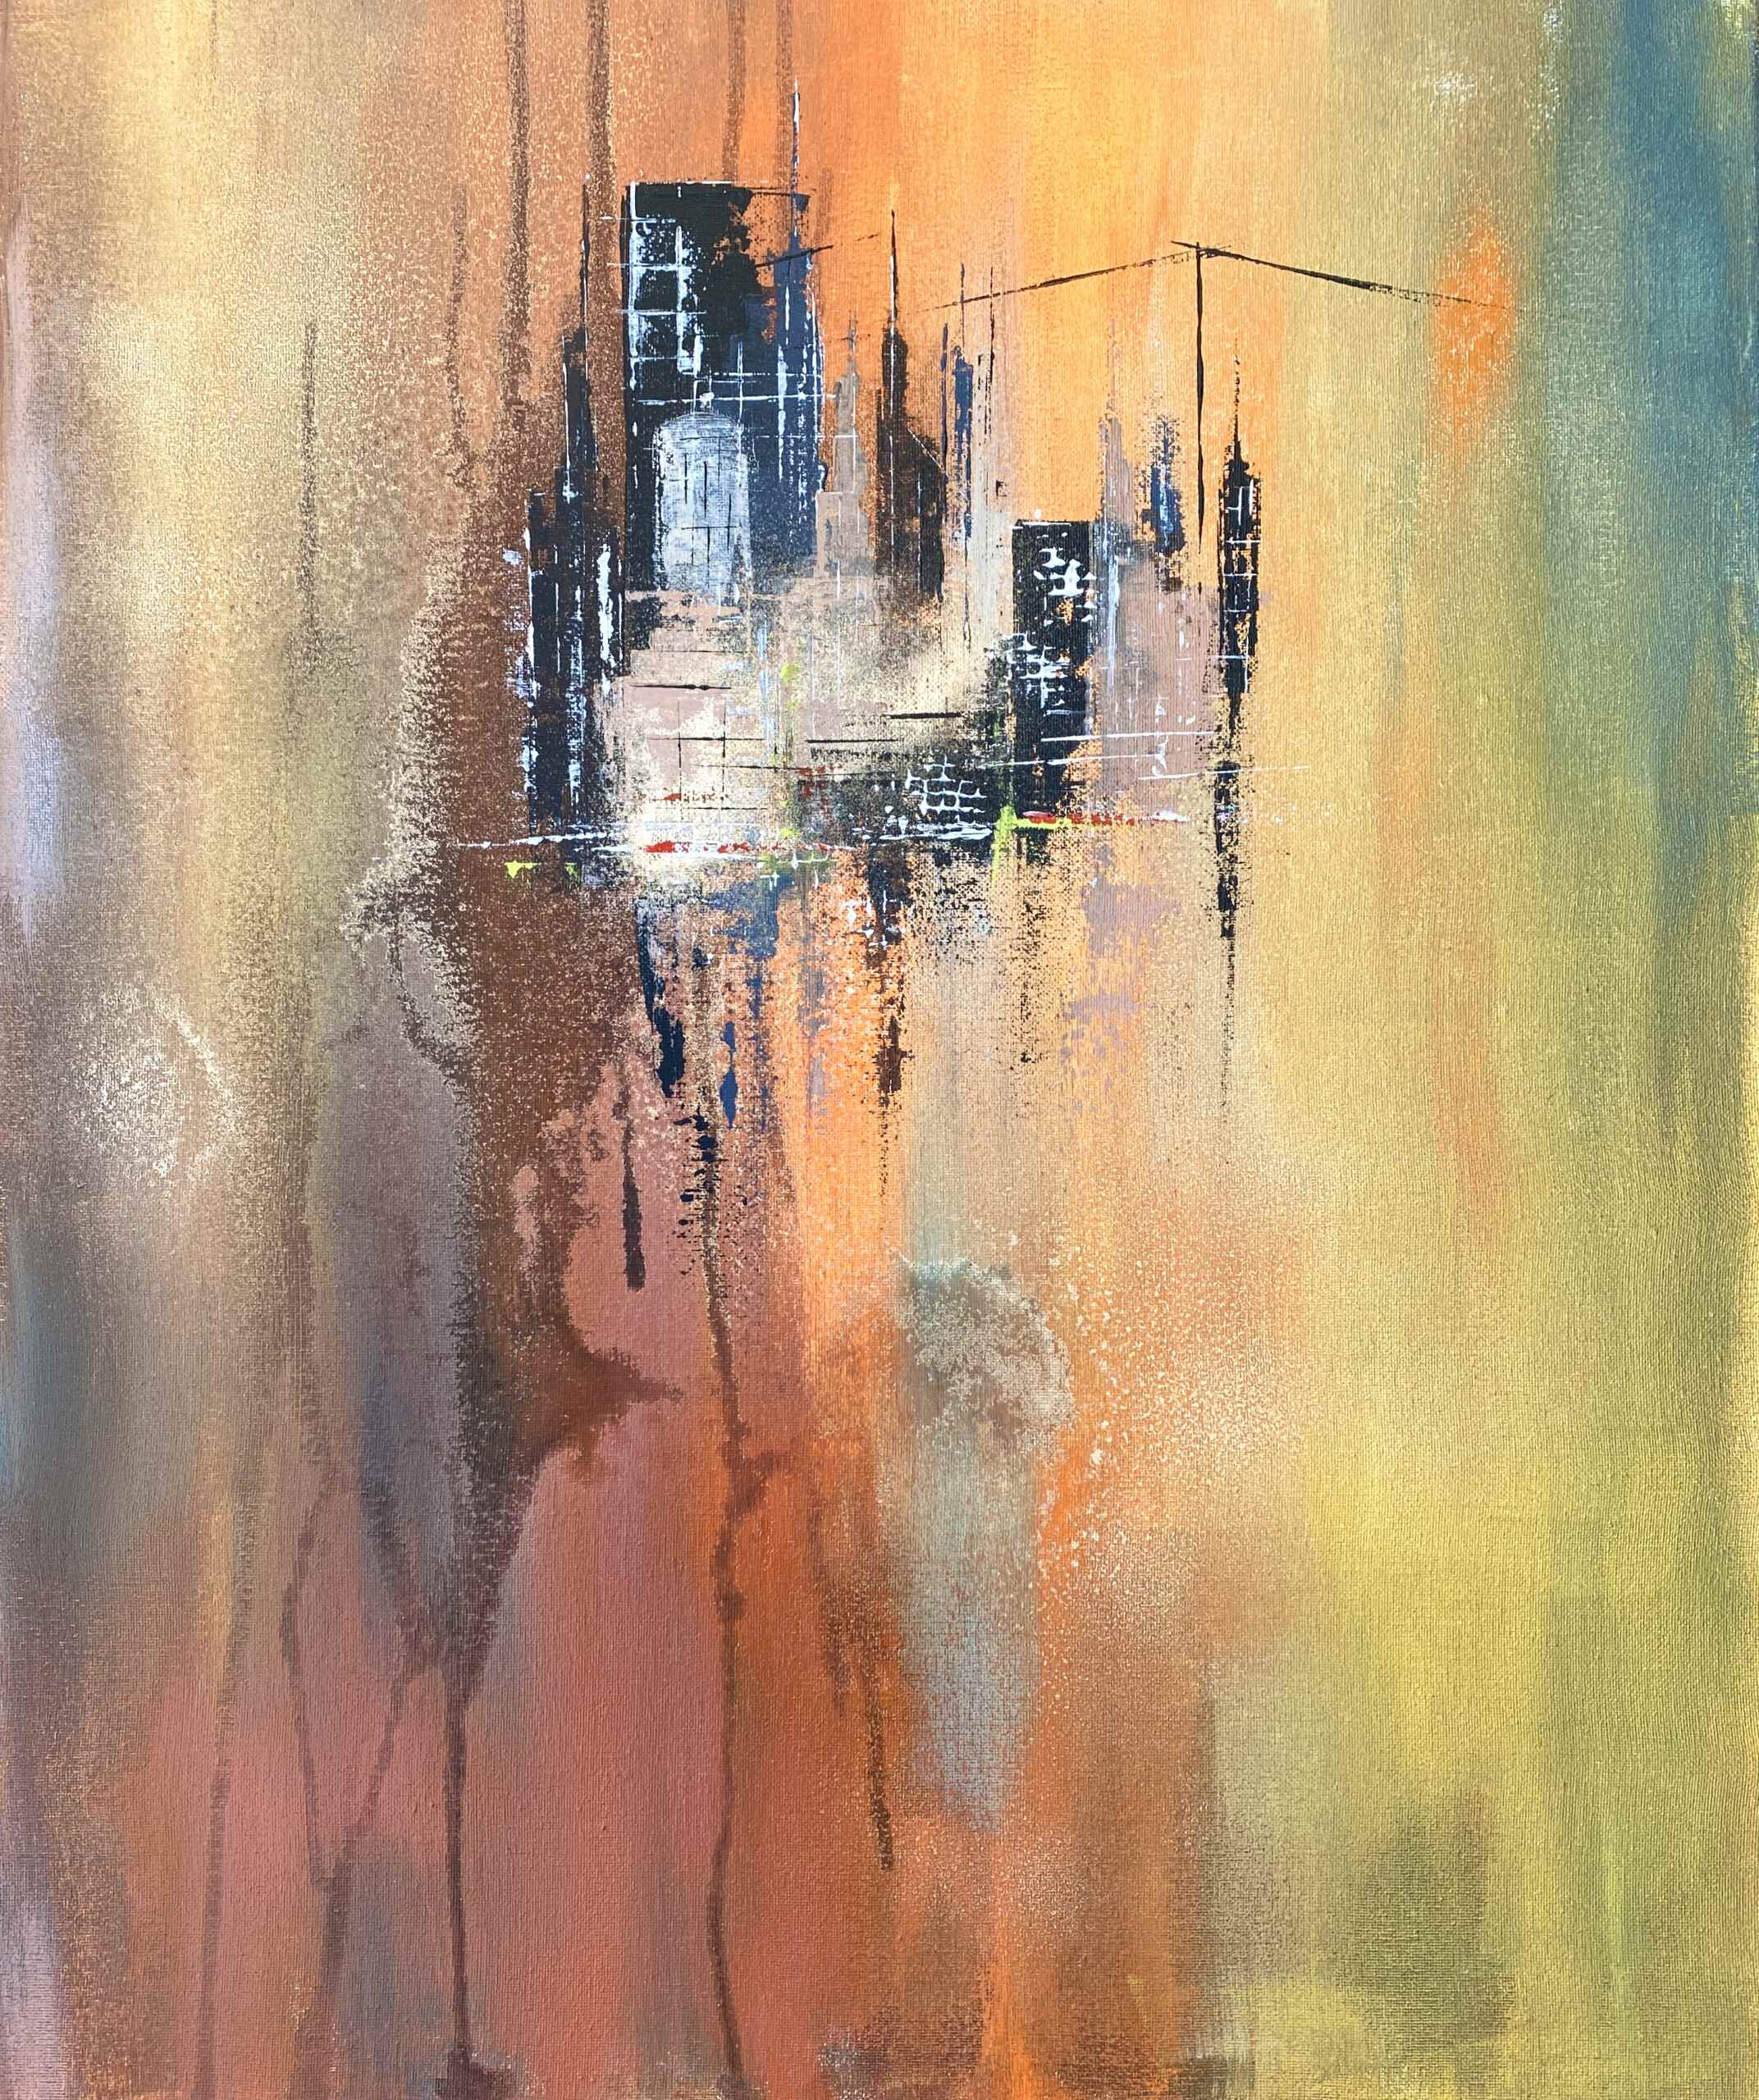 Artwork "Lights of the City No 2" by Nina Groth